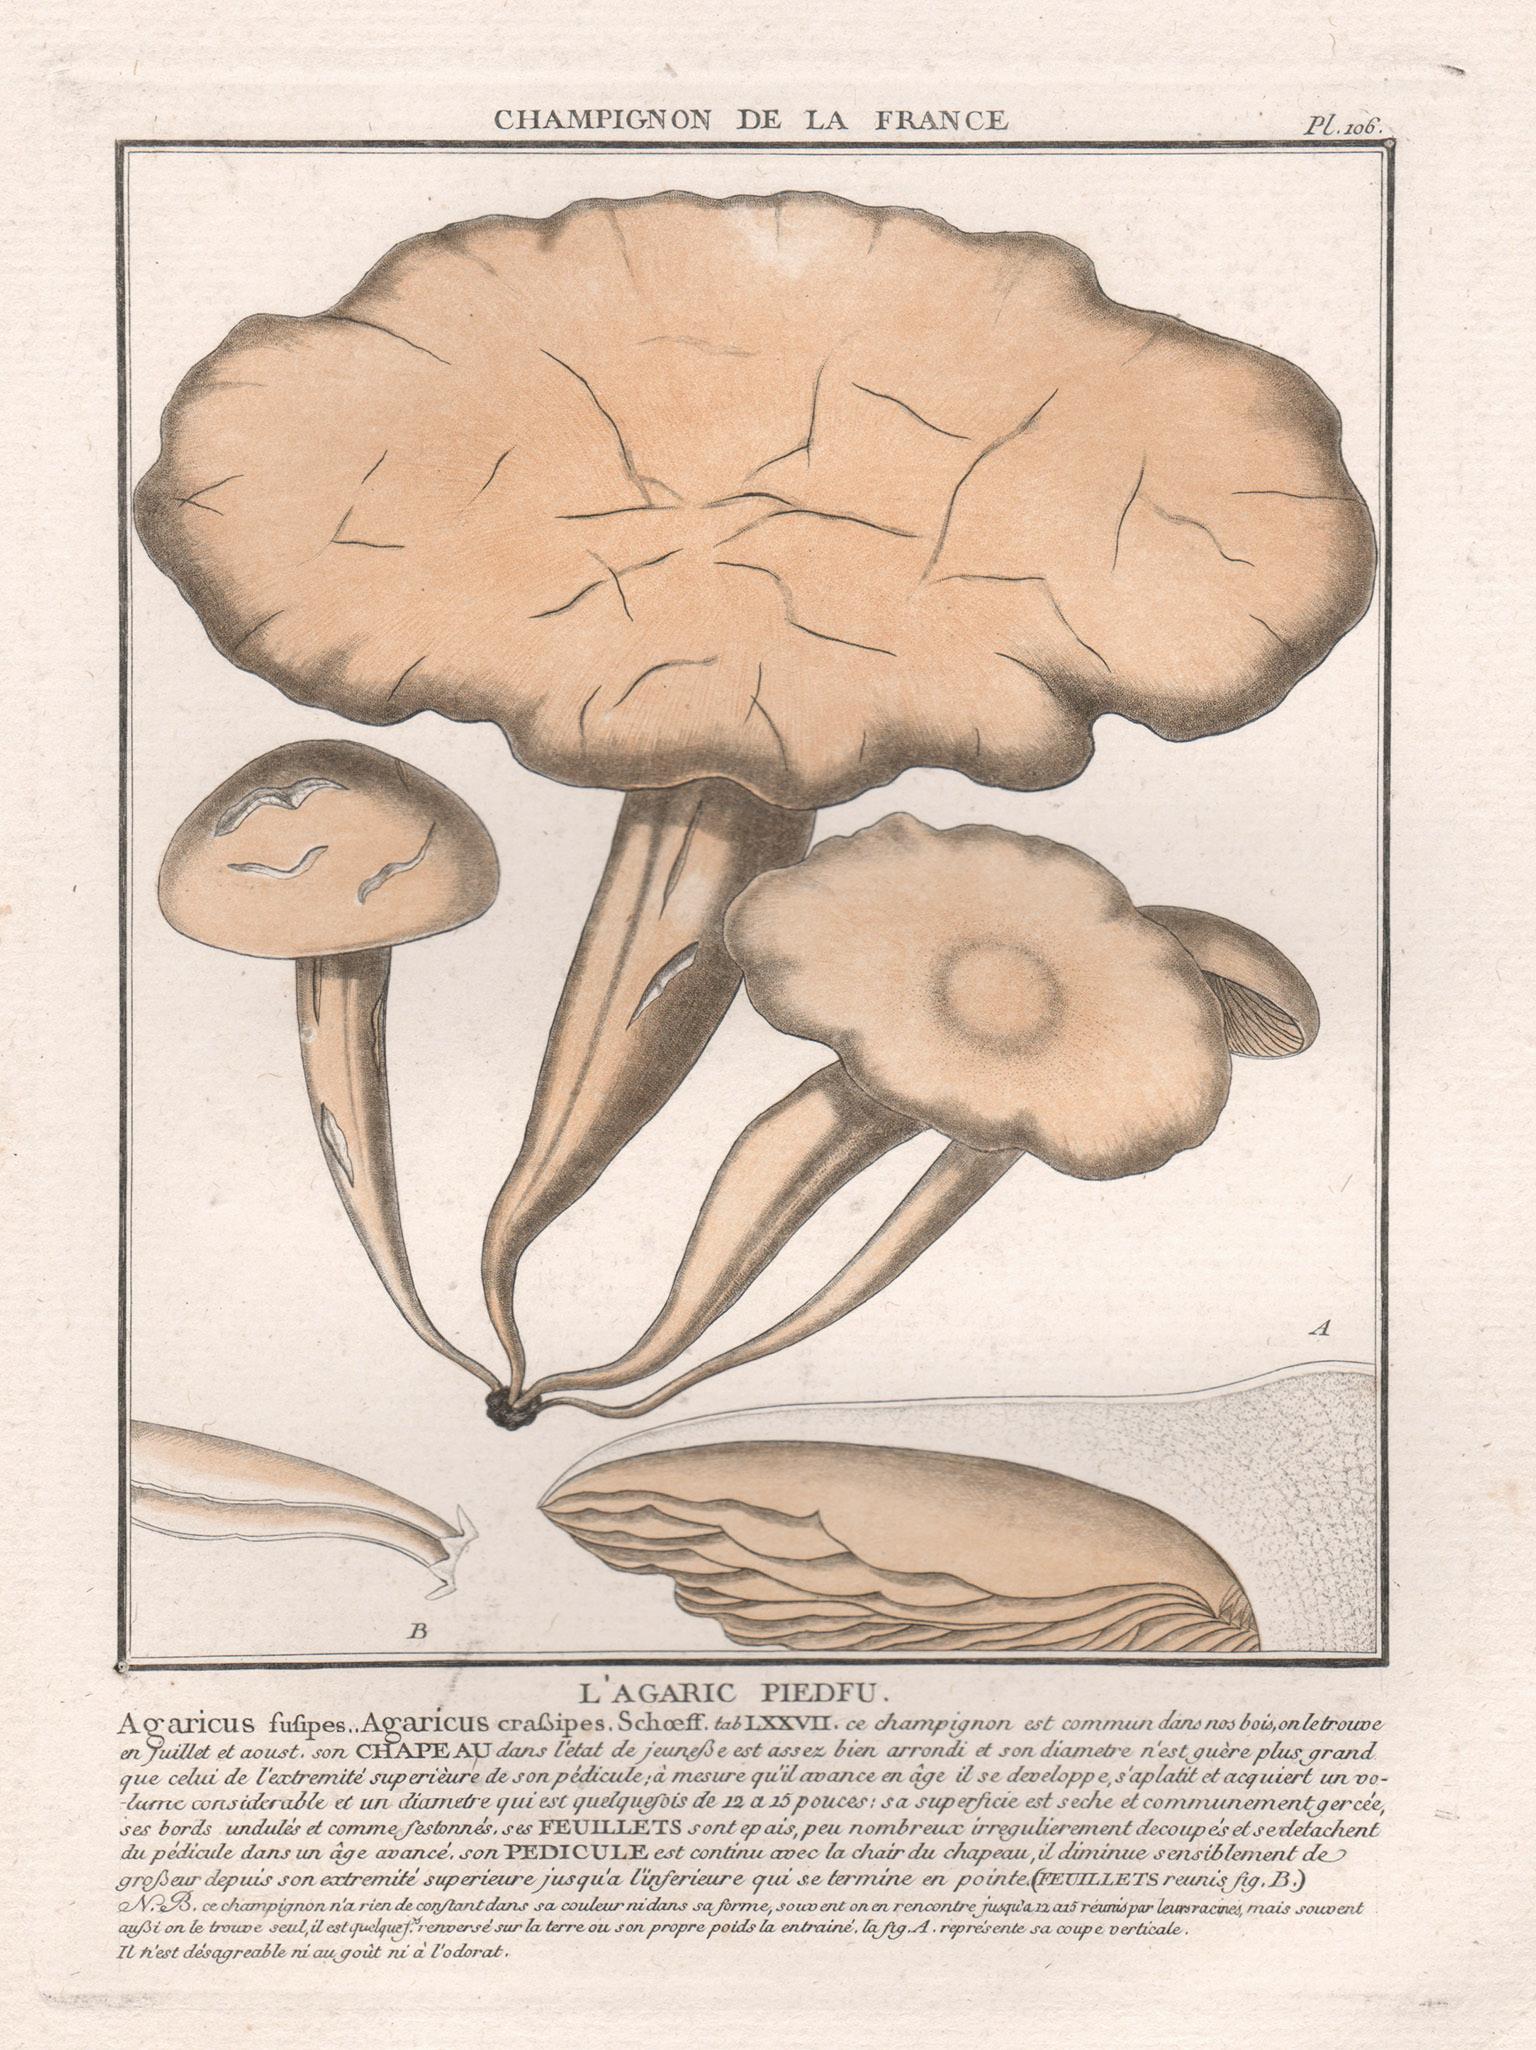 Jean Baptiste Francois Buillard Print - Champignon de la France, a French antique mushroom engraving, 1791